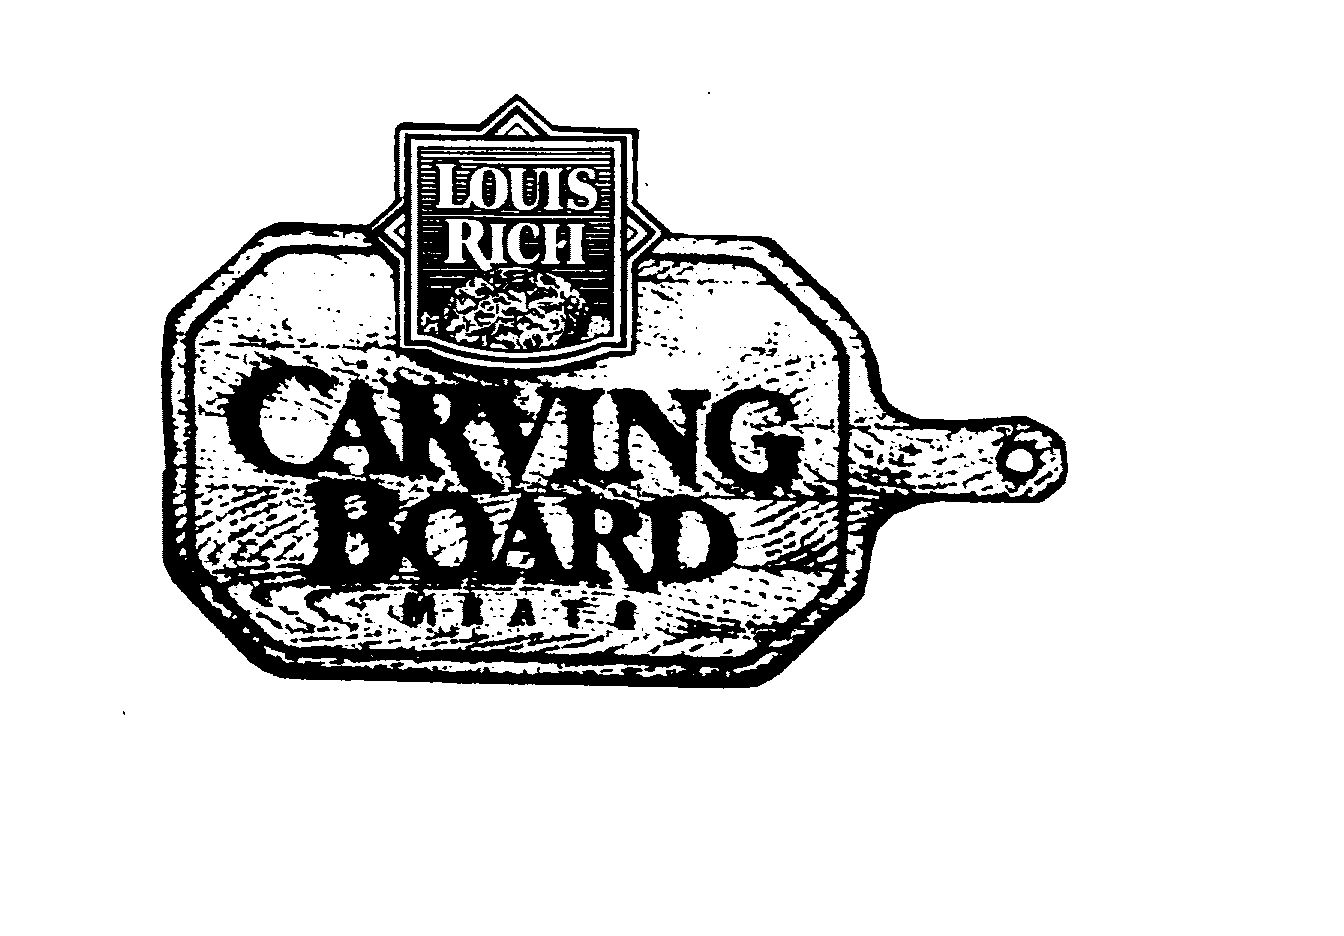  LOUIS RICH CARVING BOARD MEATS